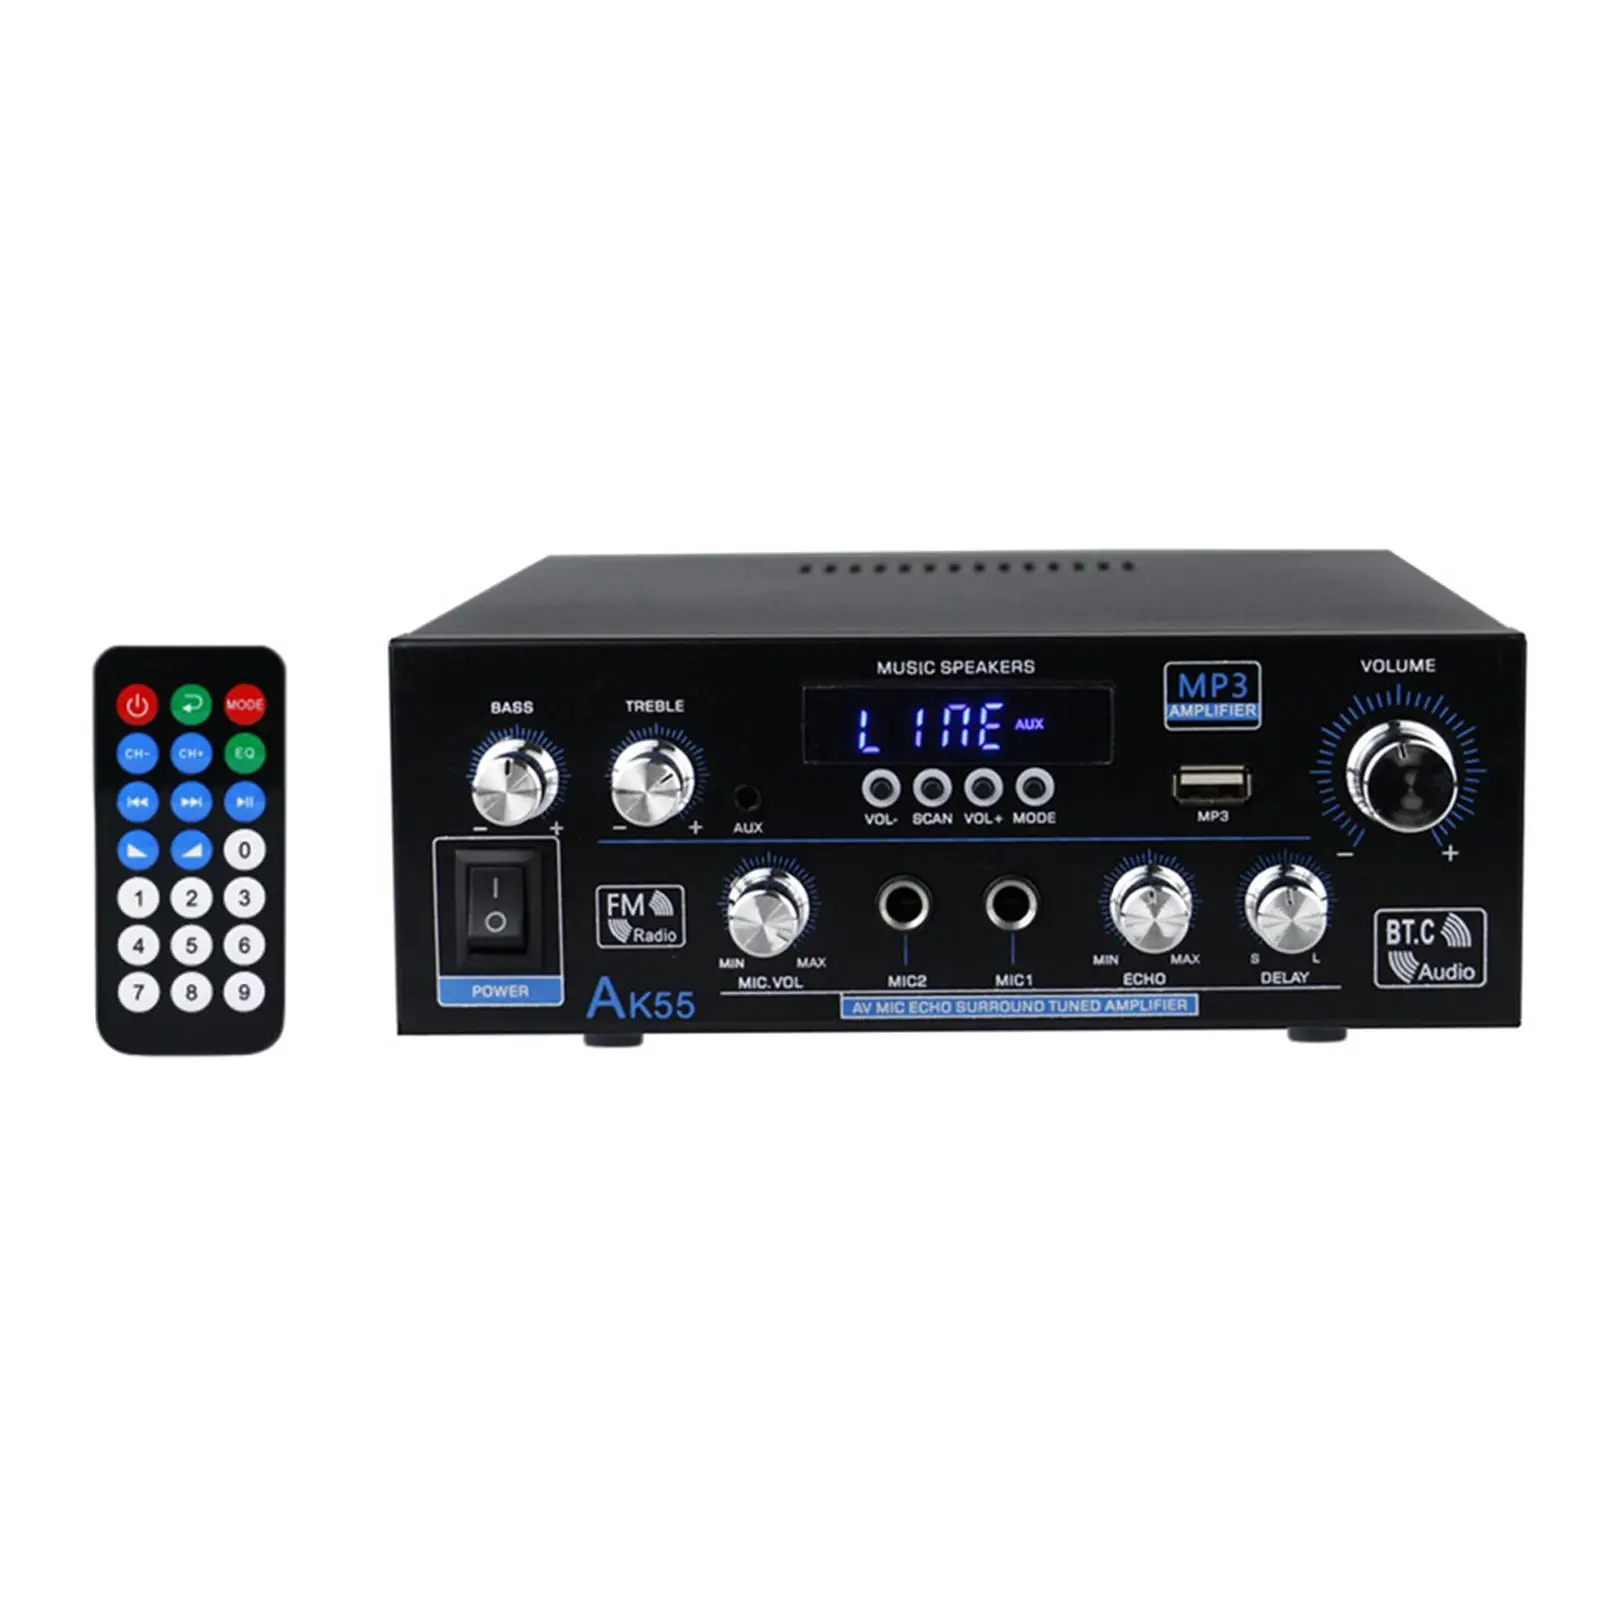 Digital Power Amplifier 110-240V 2.0 CH Echo Reverb Delay for Car Home Bar Party HiFi Stereo Amp Speaker Receiver European